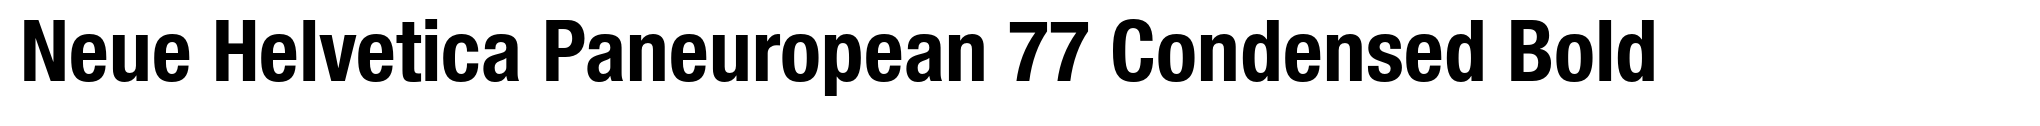 Neue Helvetica Paneuropean 77 Condensed Bold image